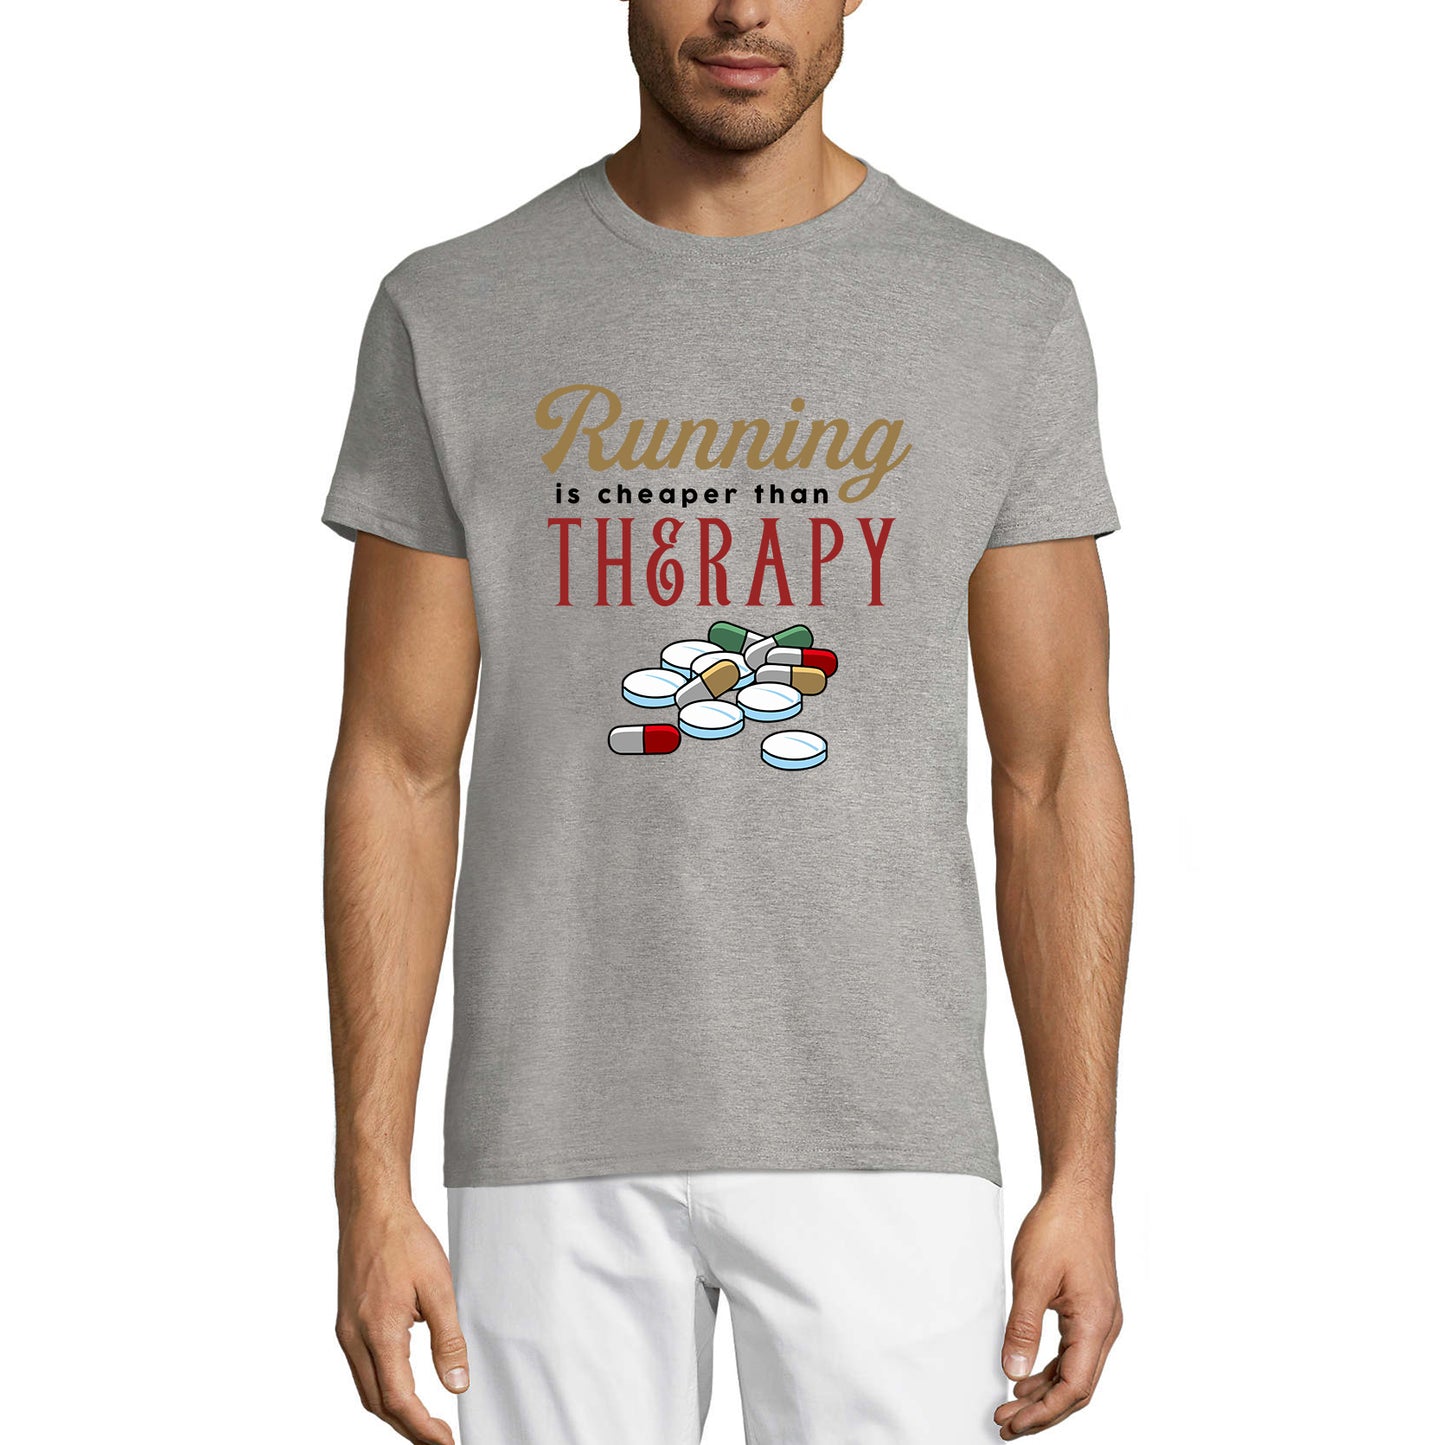 ULTRABASIC Men's Novelty T-Shirt Running is Cheaper than Therapy - Funny Runner Tee Shirt